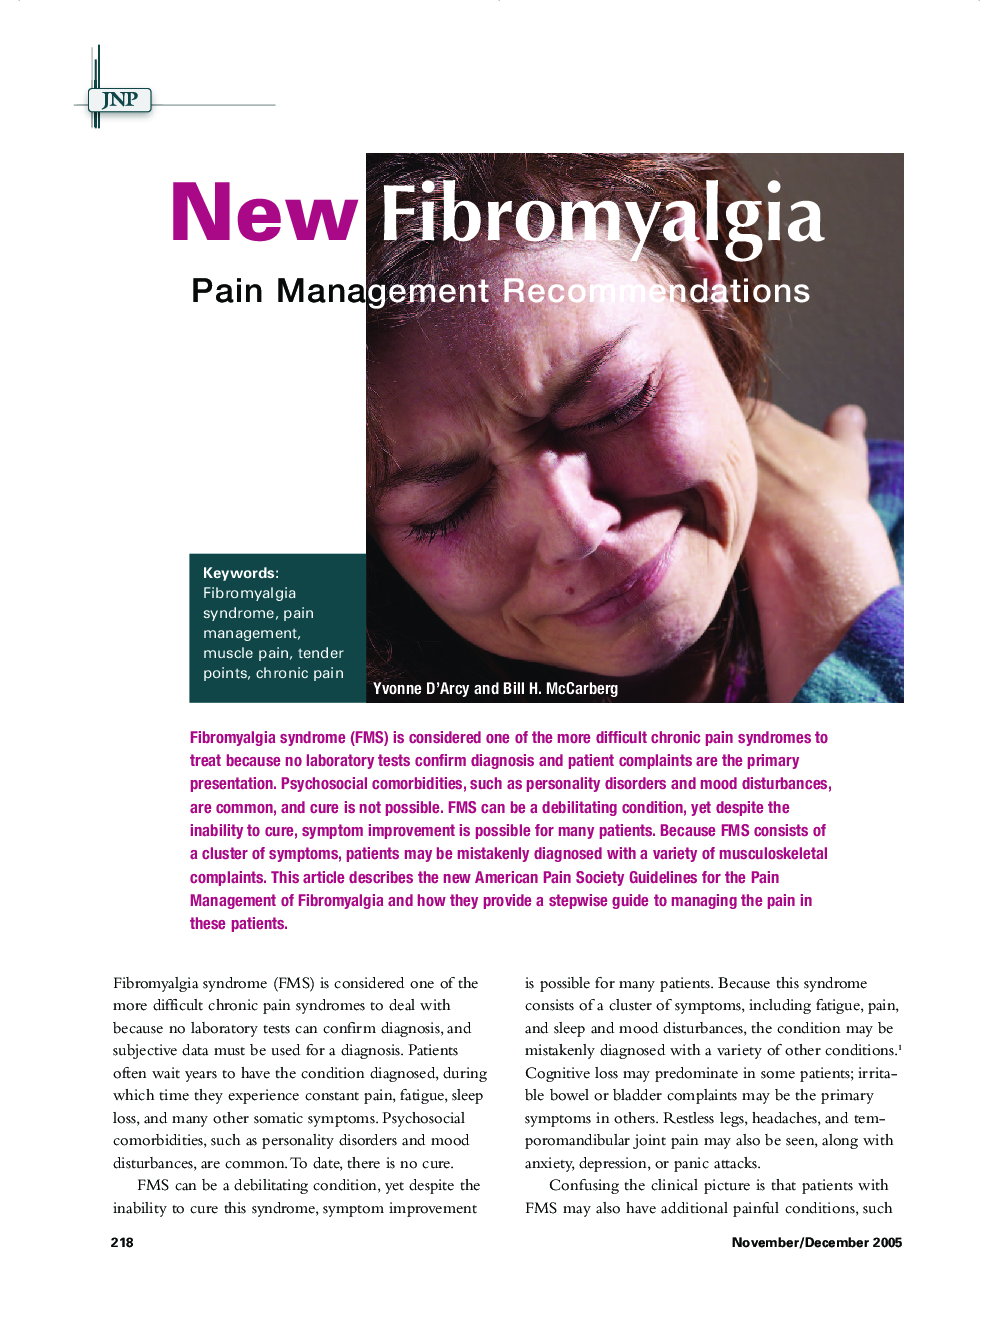 New Fibromyalgia Pain Management Recommendations